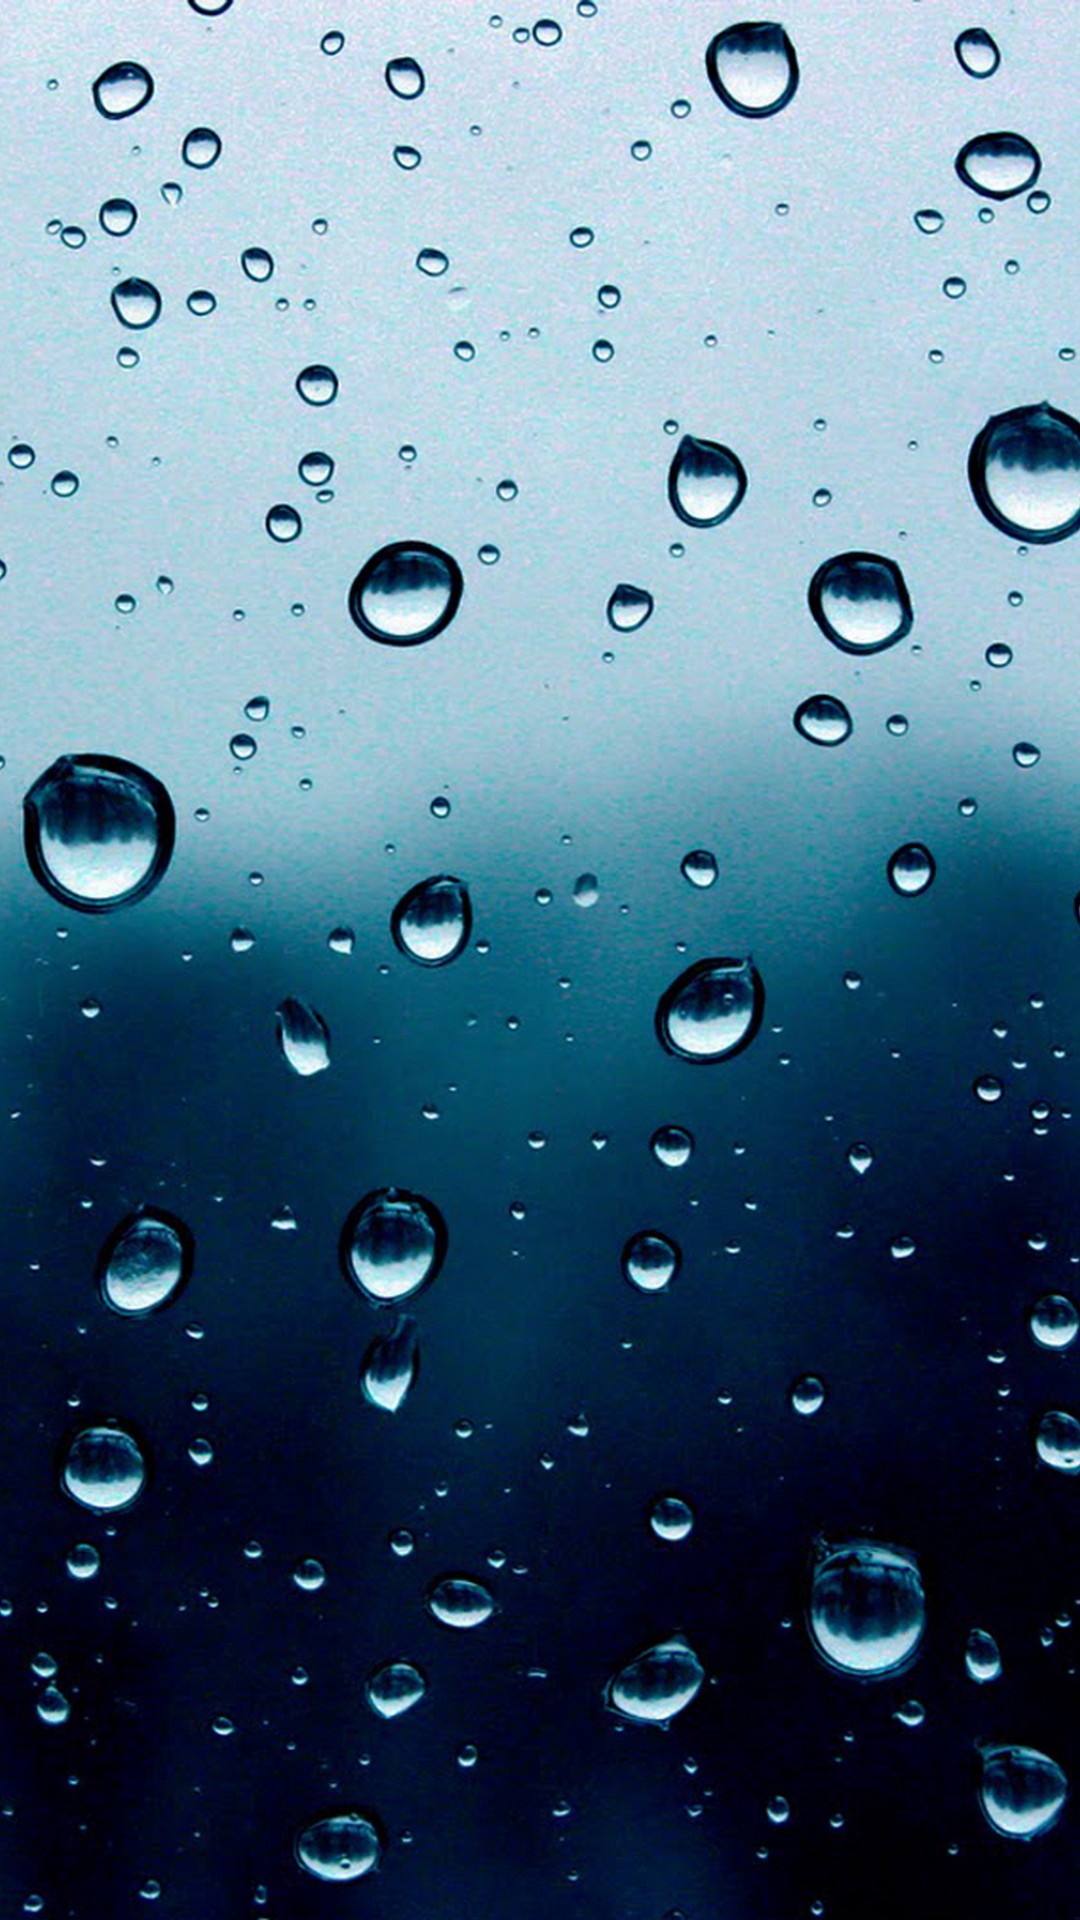 iPhone Wallpaper of Rain resolution 1080x1920